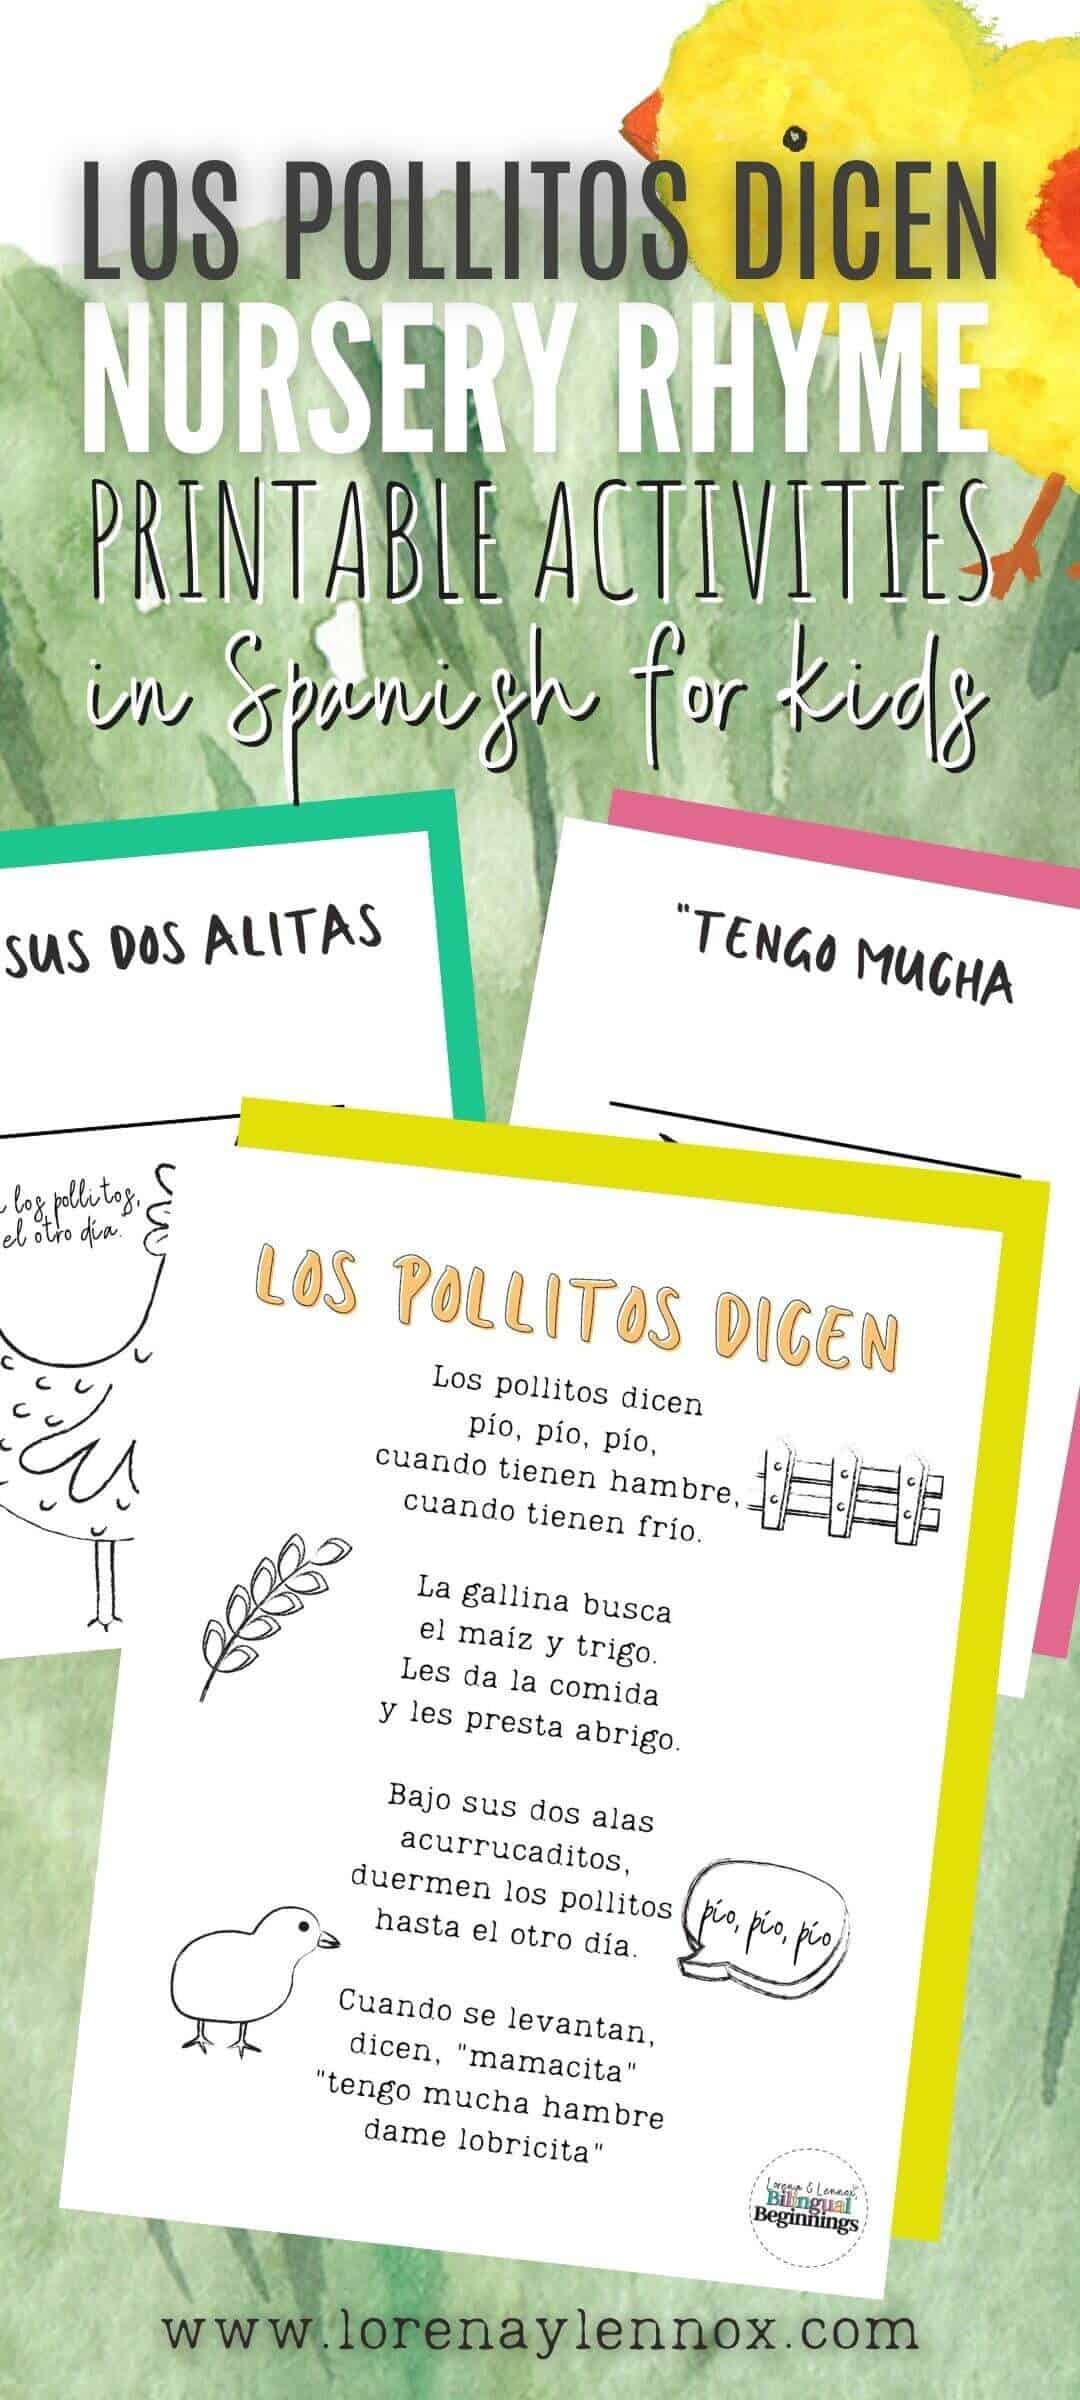 "Los pollitos dicen" printable pdf activities in Spanish